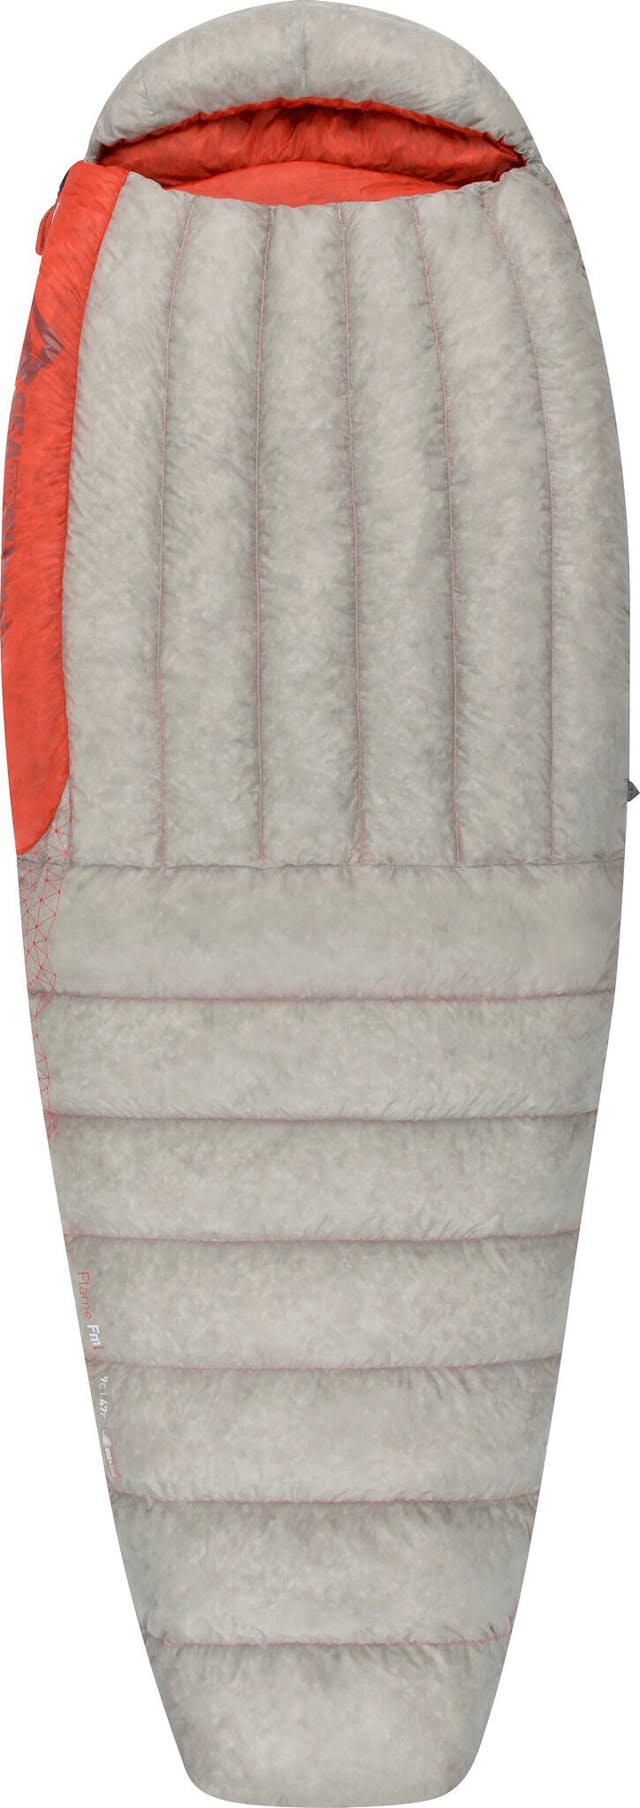 Product image for Flame Ultralight Sleeping Bag Regular 47°F / 9°C - Women's